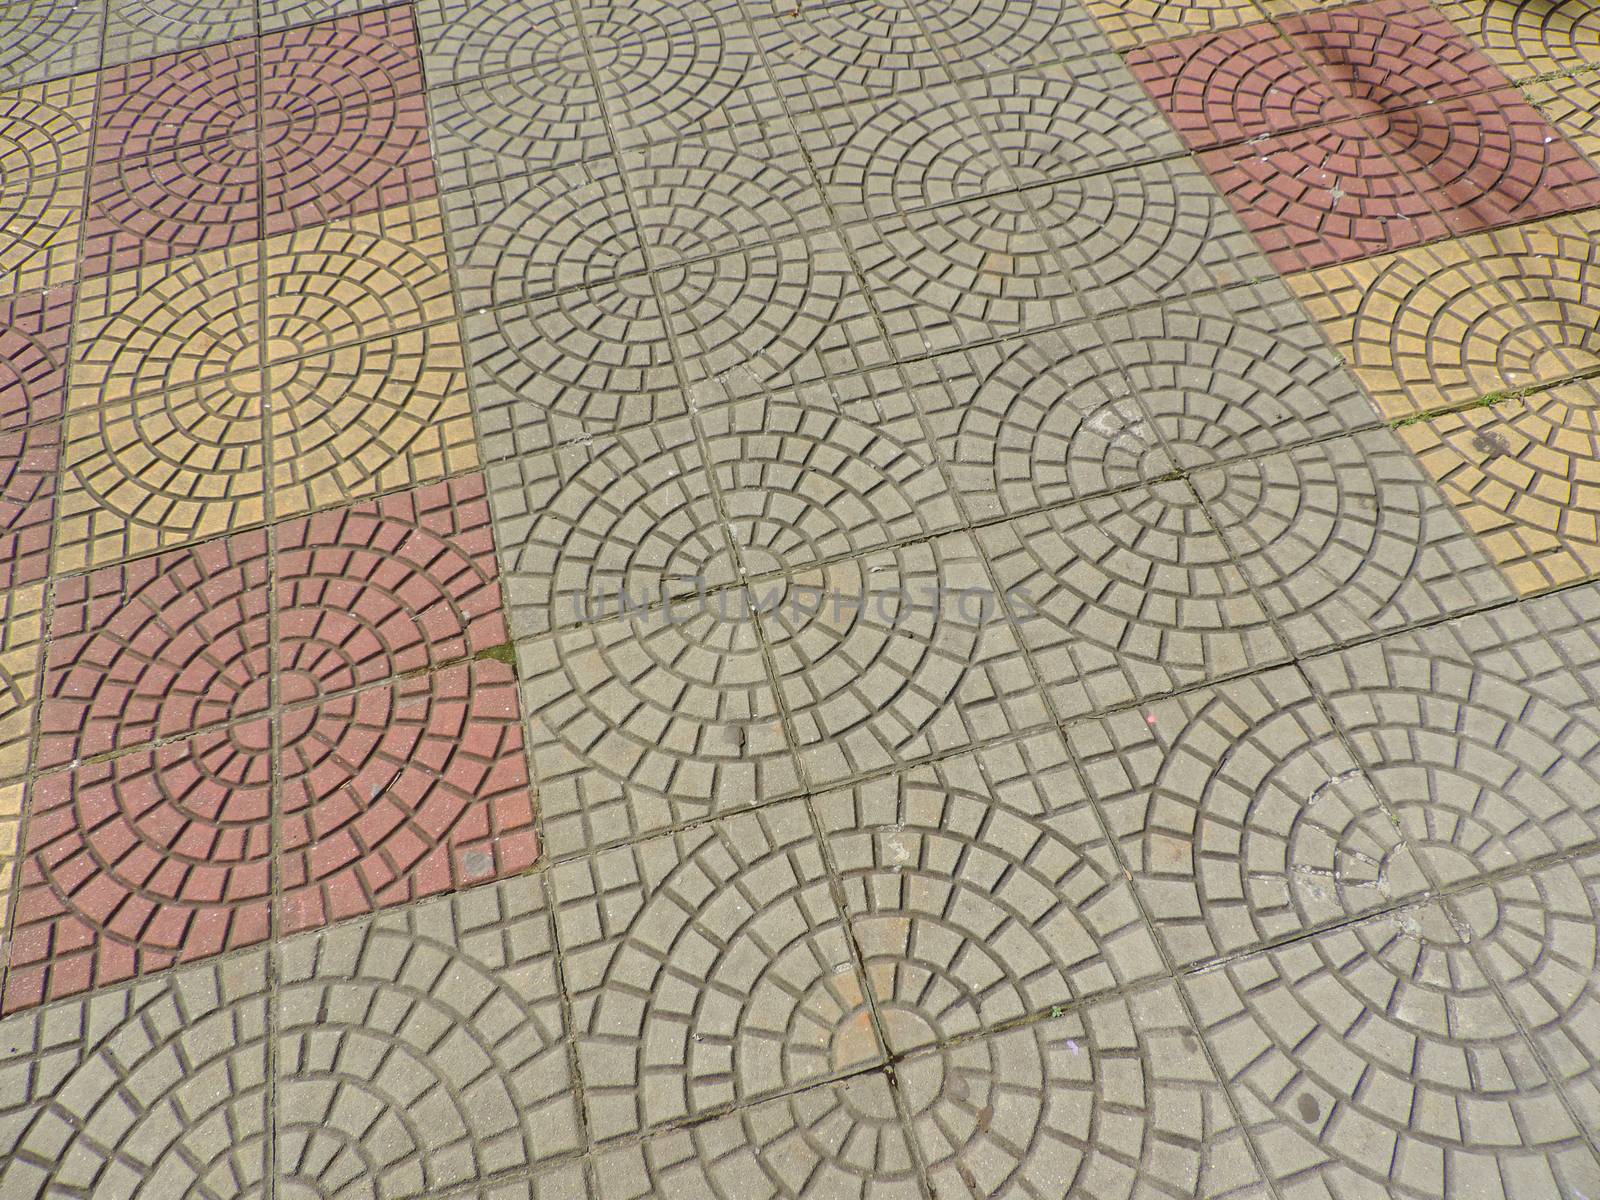 Tiled mosaic concrete pavement of the sidewalk